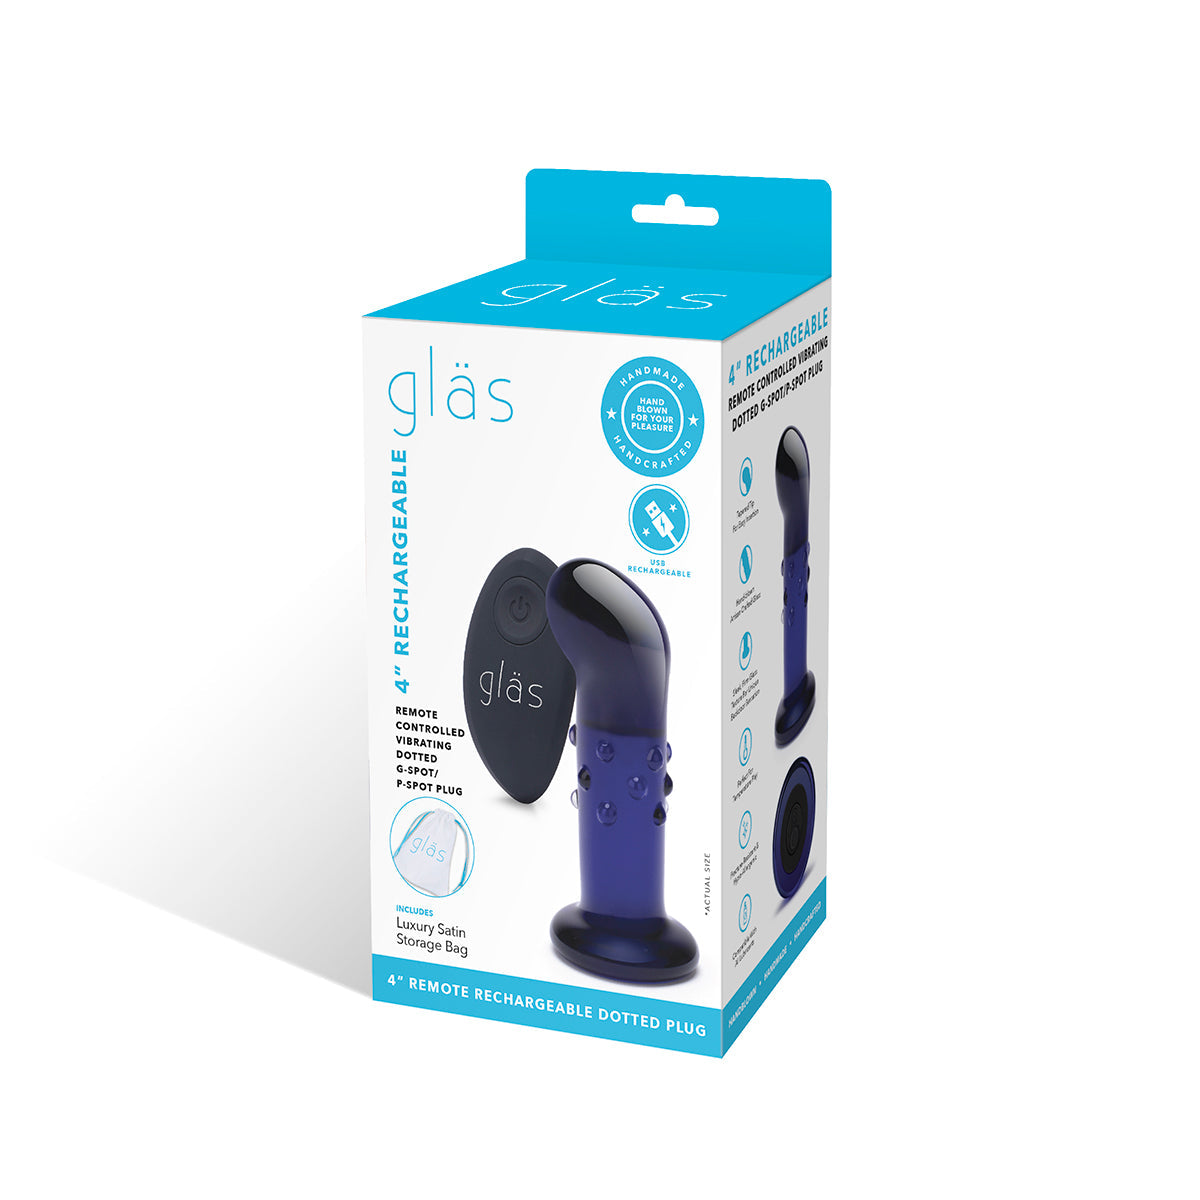 Glas 4" Rechargeable Vibrating Dotted G-Spot/p Spot Plug - Blue